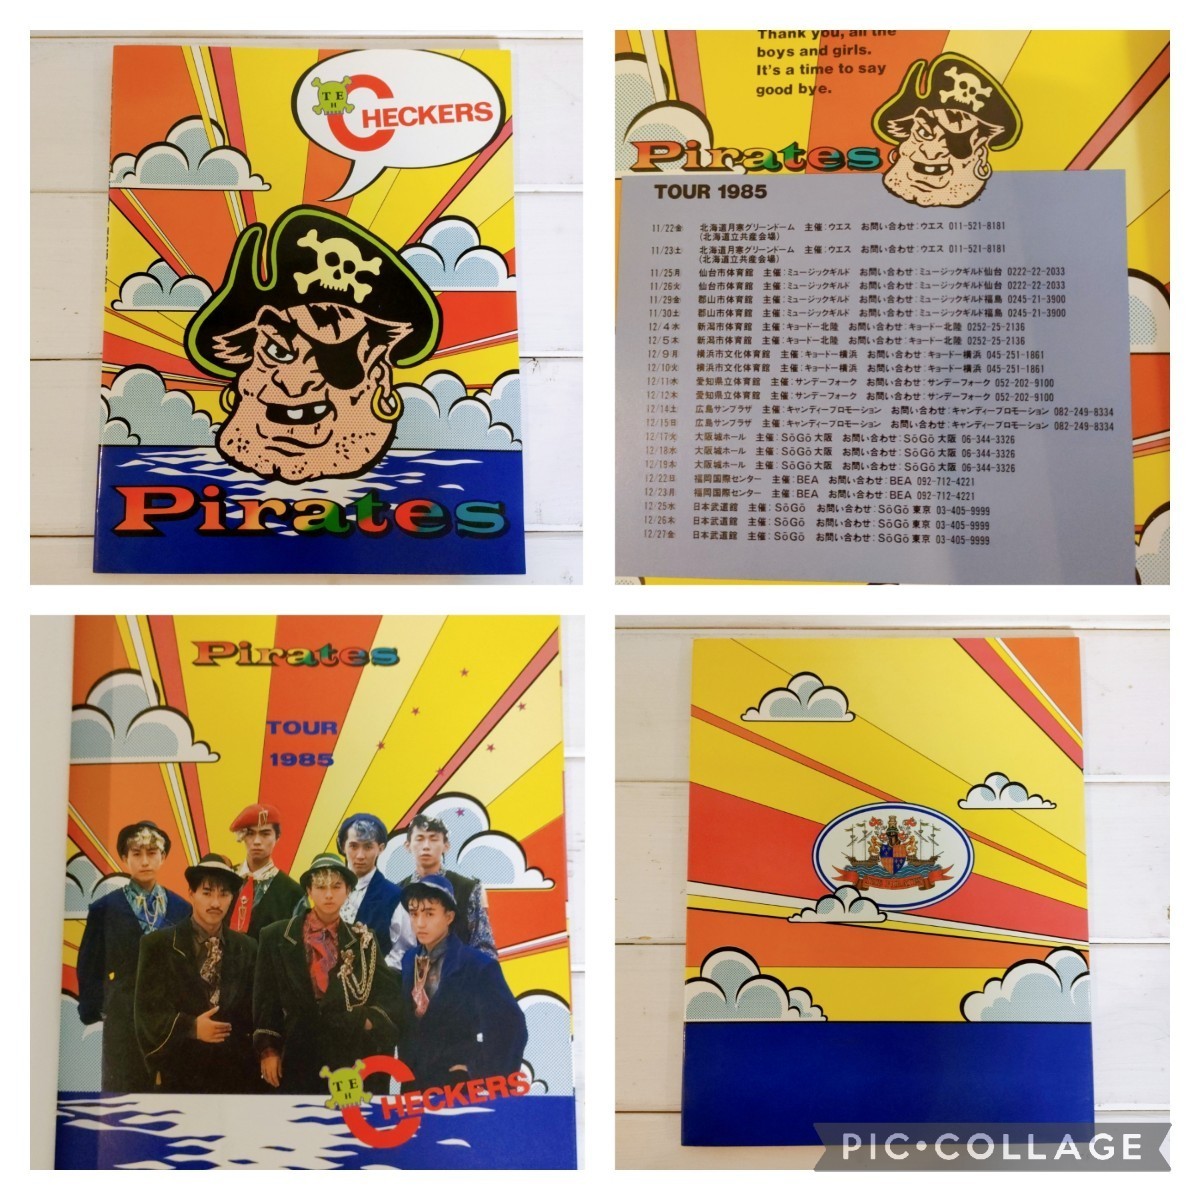 ST1] The Checkers NEXT photoalbum publication pamphlet 6 pcs. set summarize Showa era idol song bending song book ..fmiya movie book